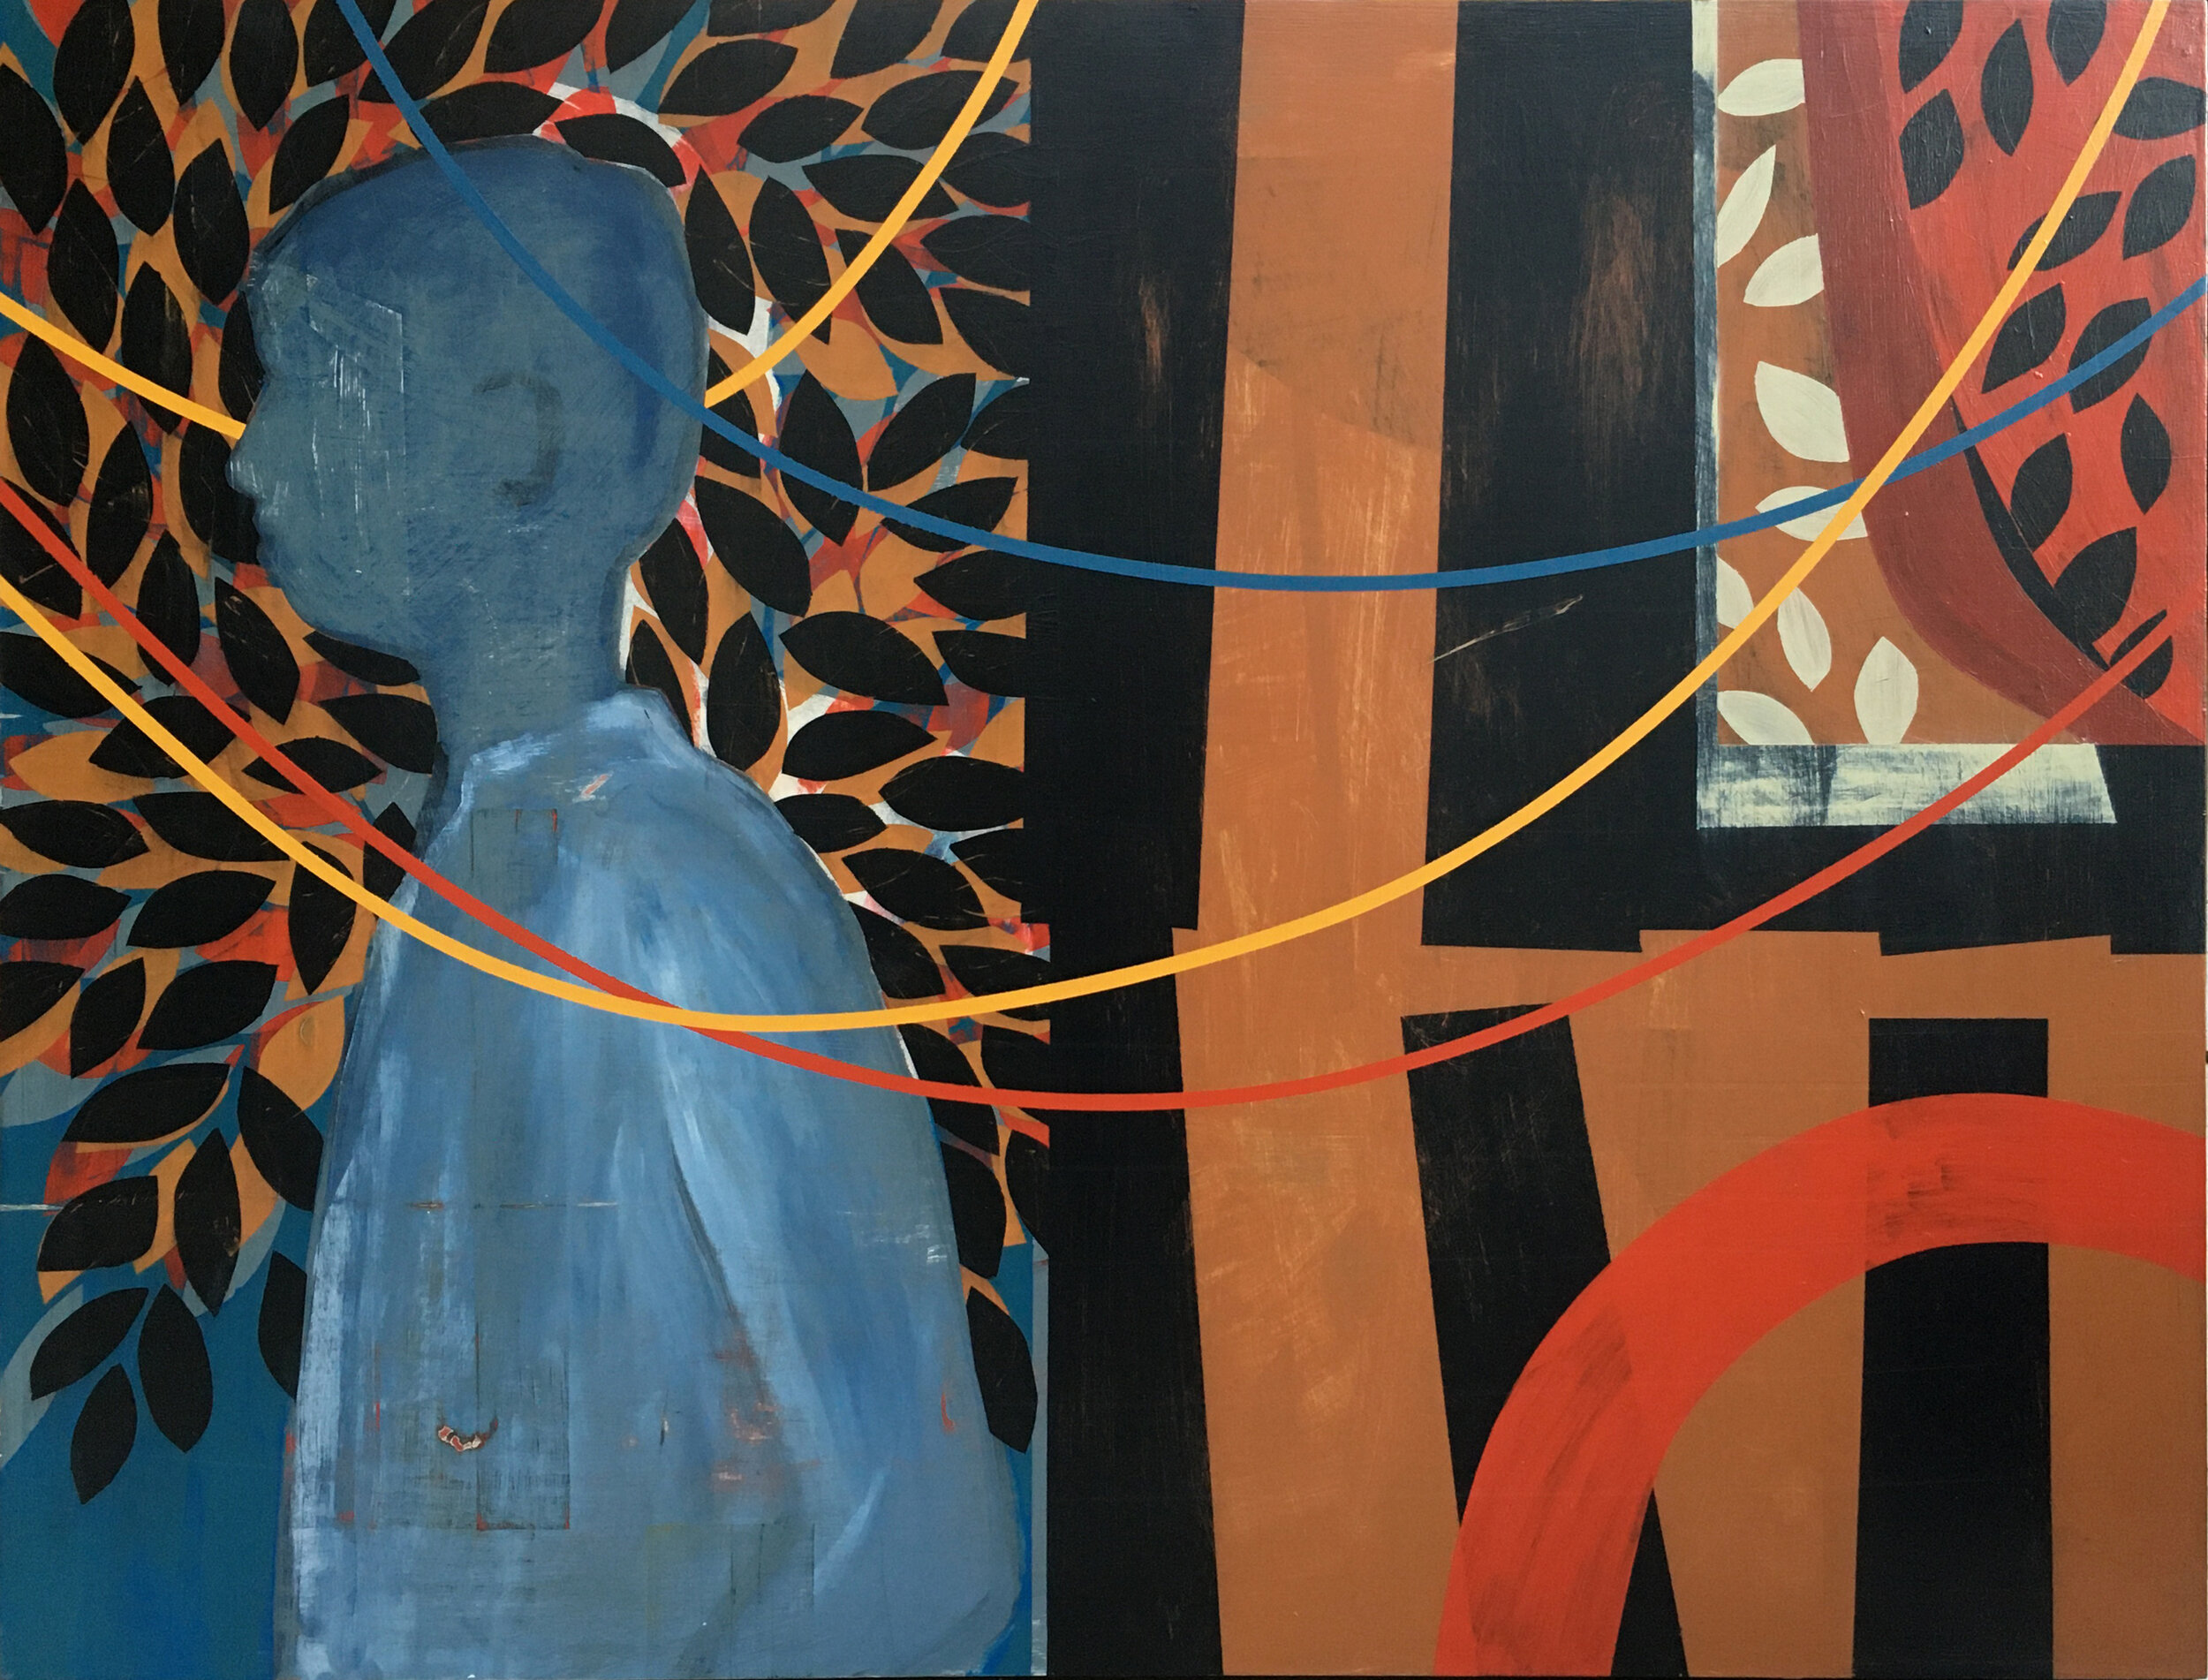 Martin Webb, Inhabit, 2020, Acrylic and mixed media on wood panel, 30 x 40"